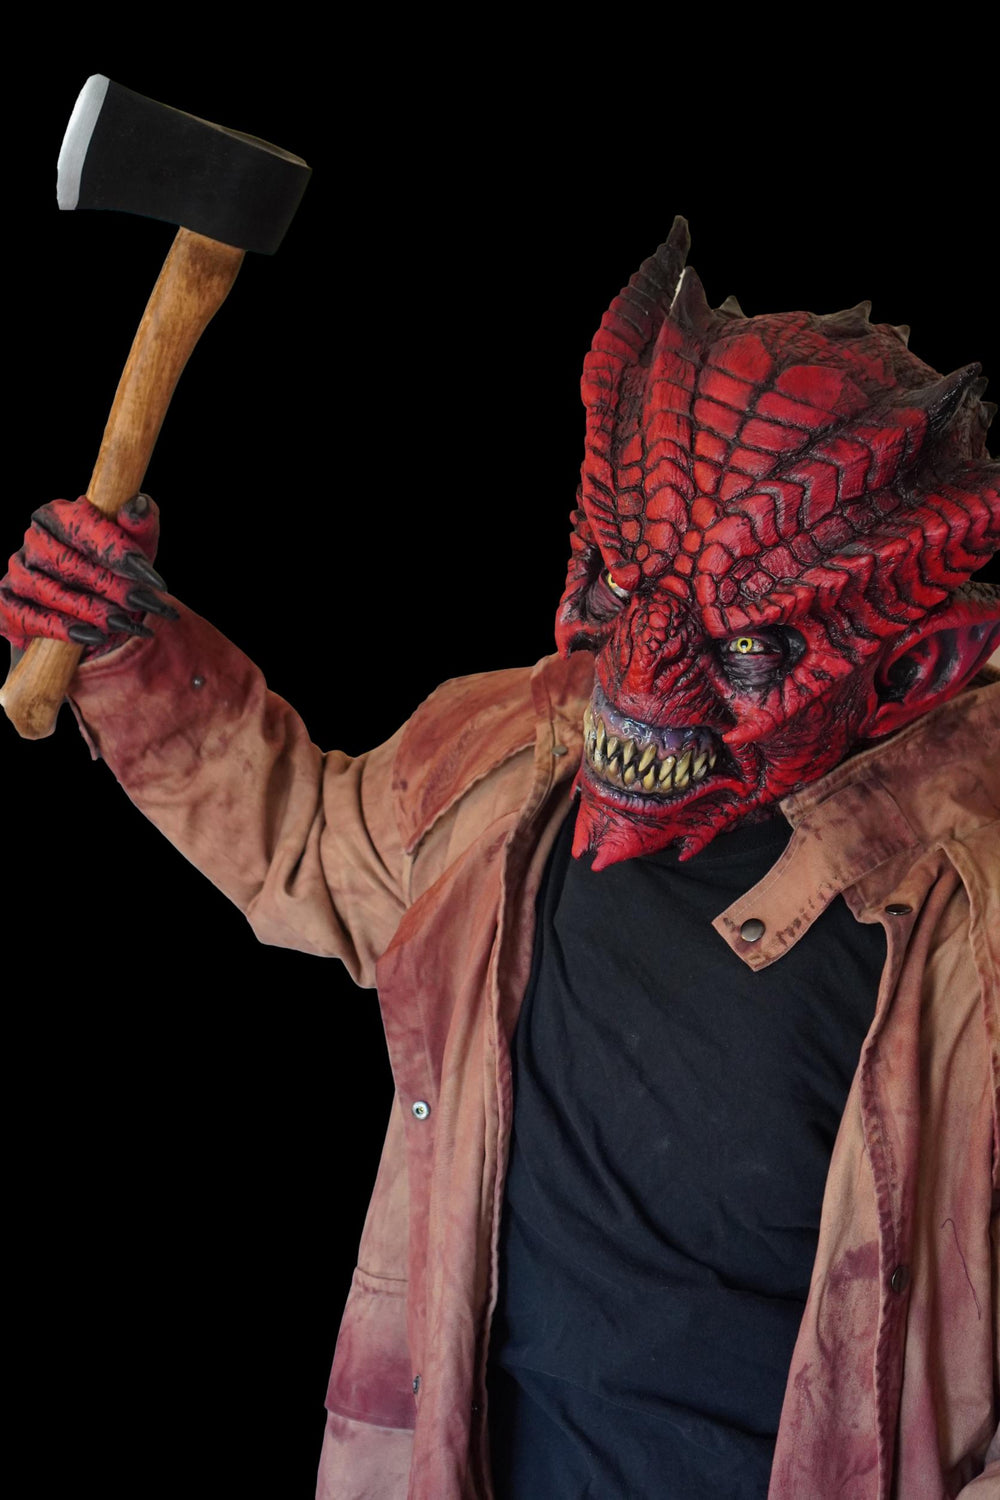 "Bedlam the Demon" HD Studios Costume